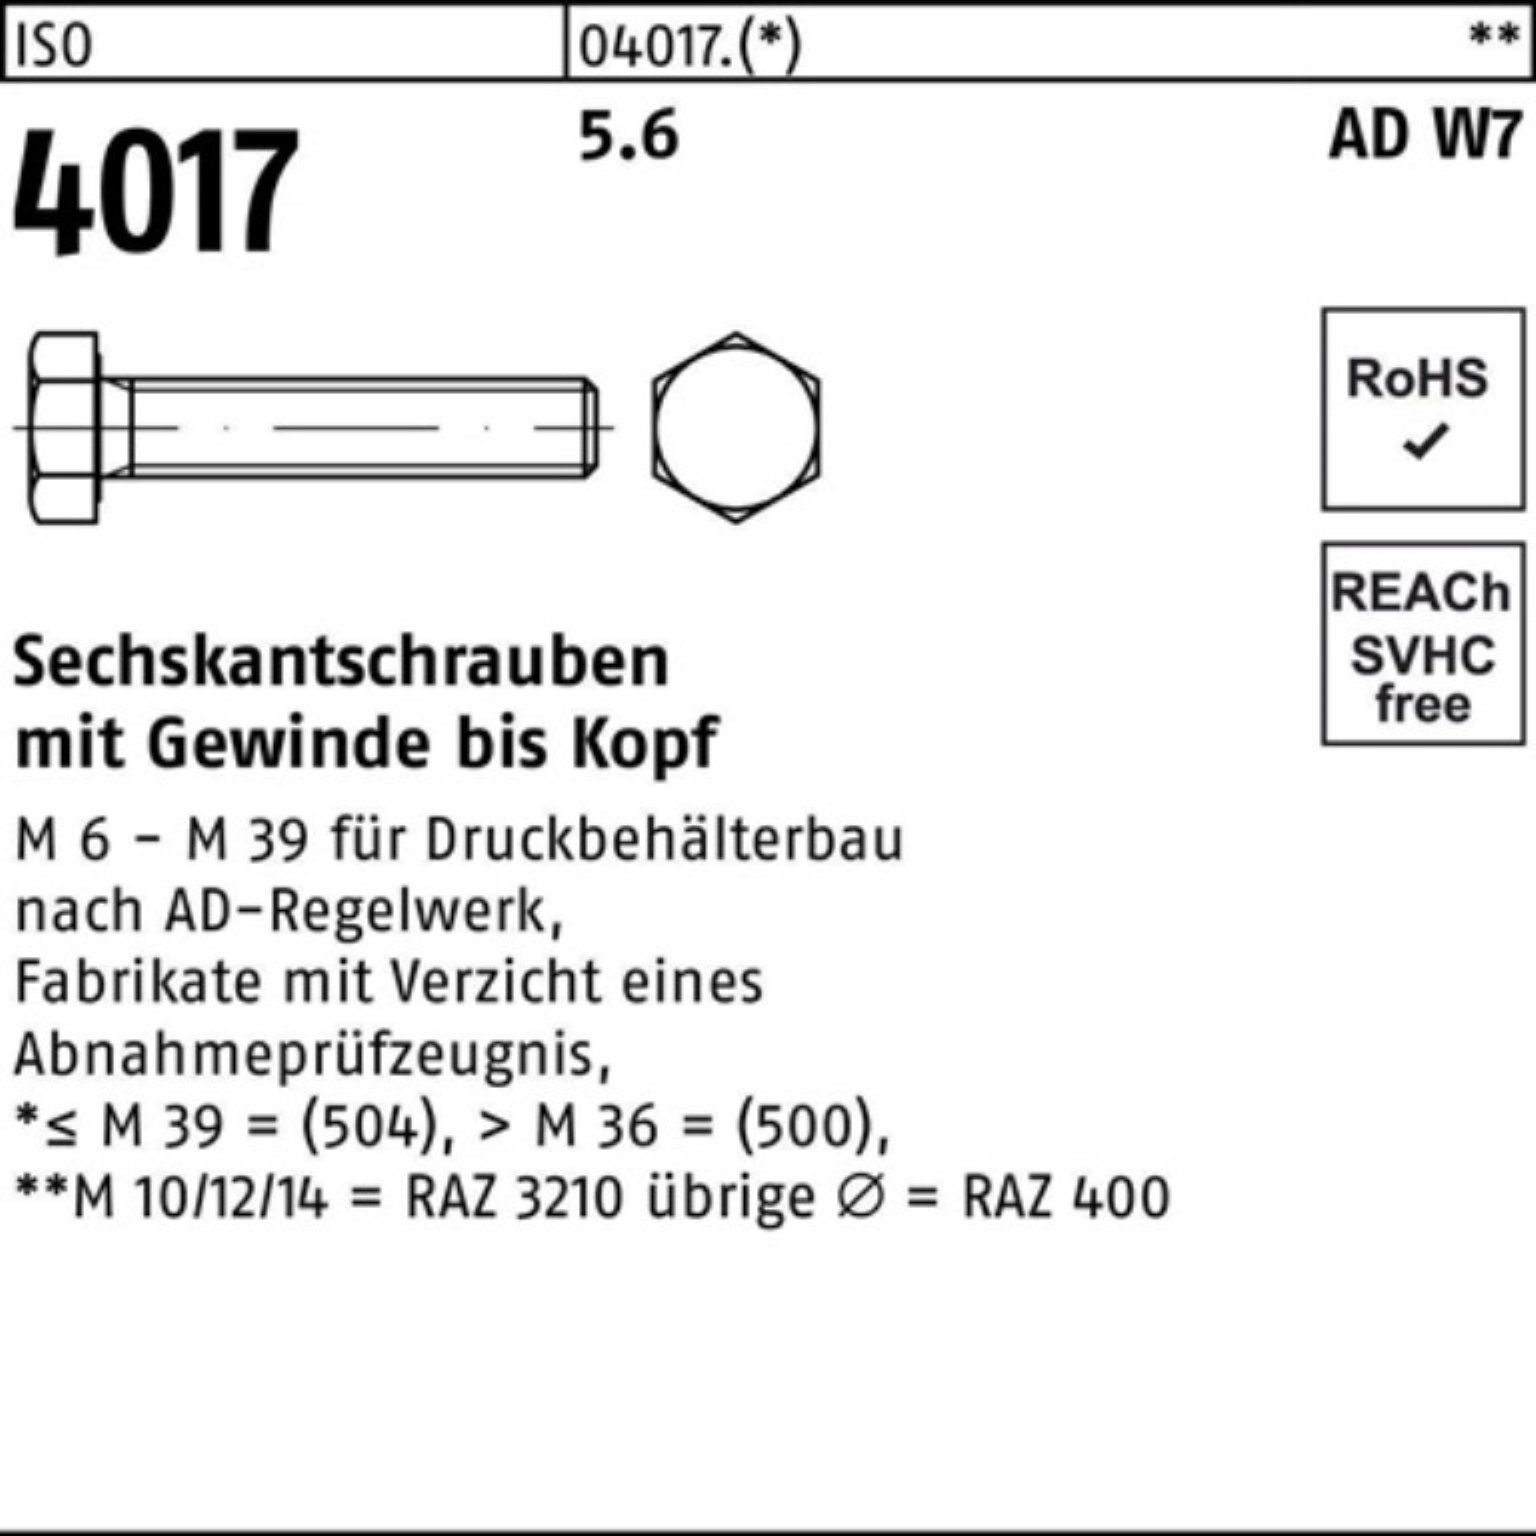 VG Sechskantschraube Pack 5.6 AD Bufab W7 M12x 100 100er ISO Sechskantschraube 55 4017 Stück